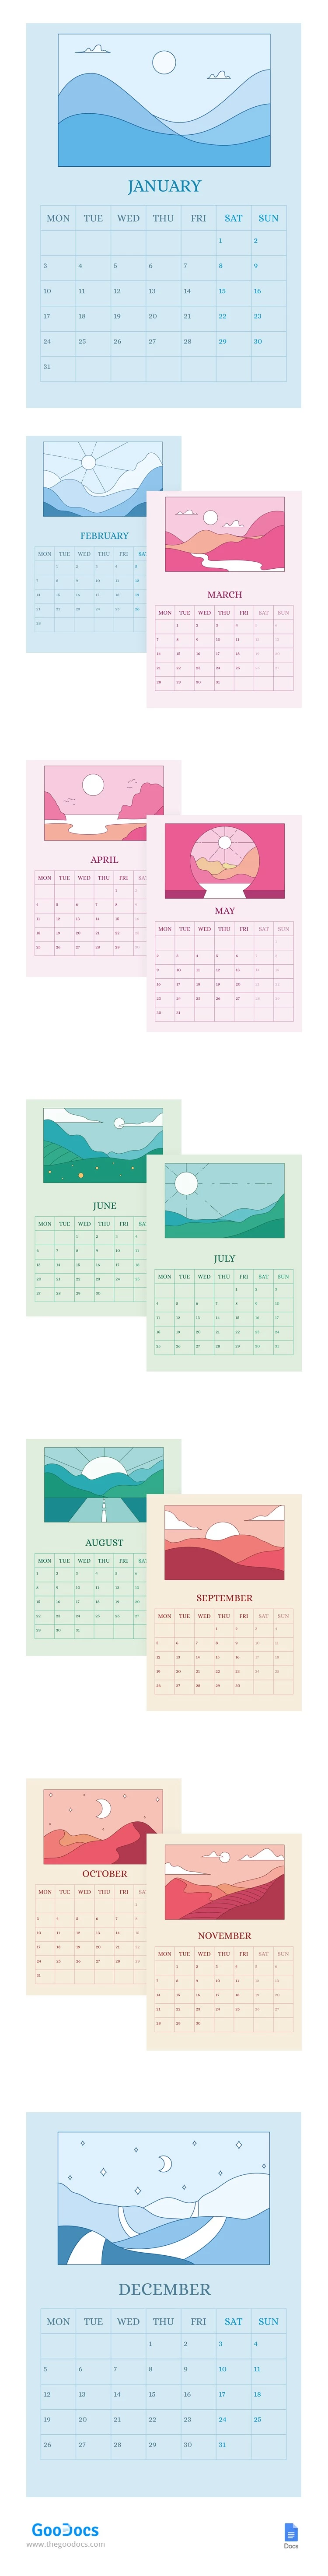 2022 Landscape Calendar - free Google Docs Template - 10062218